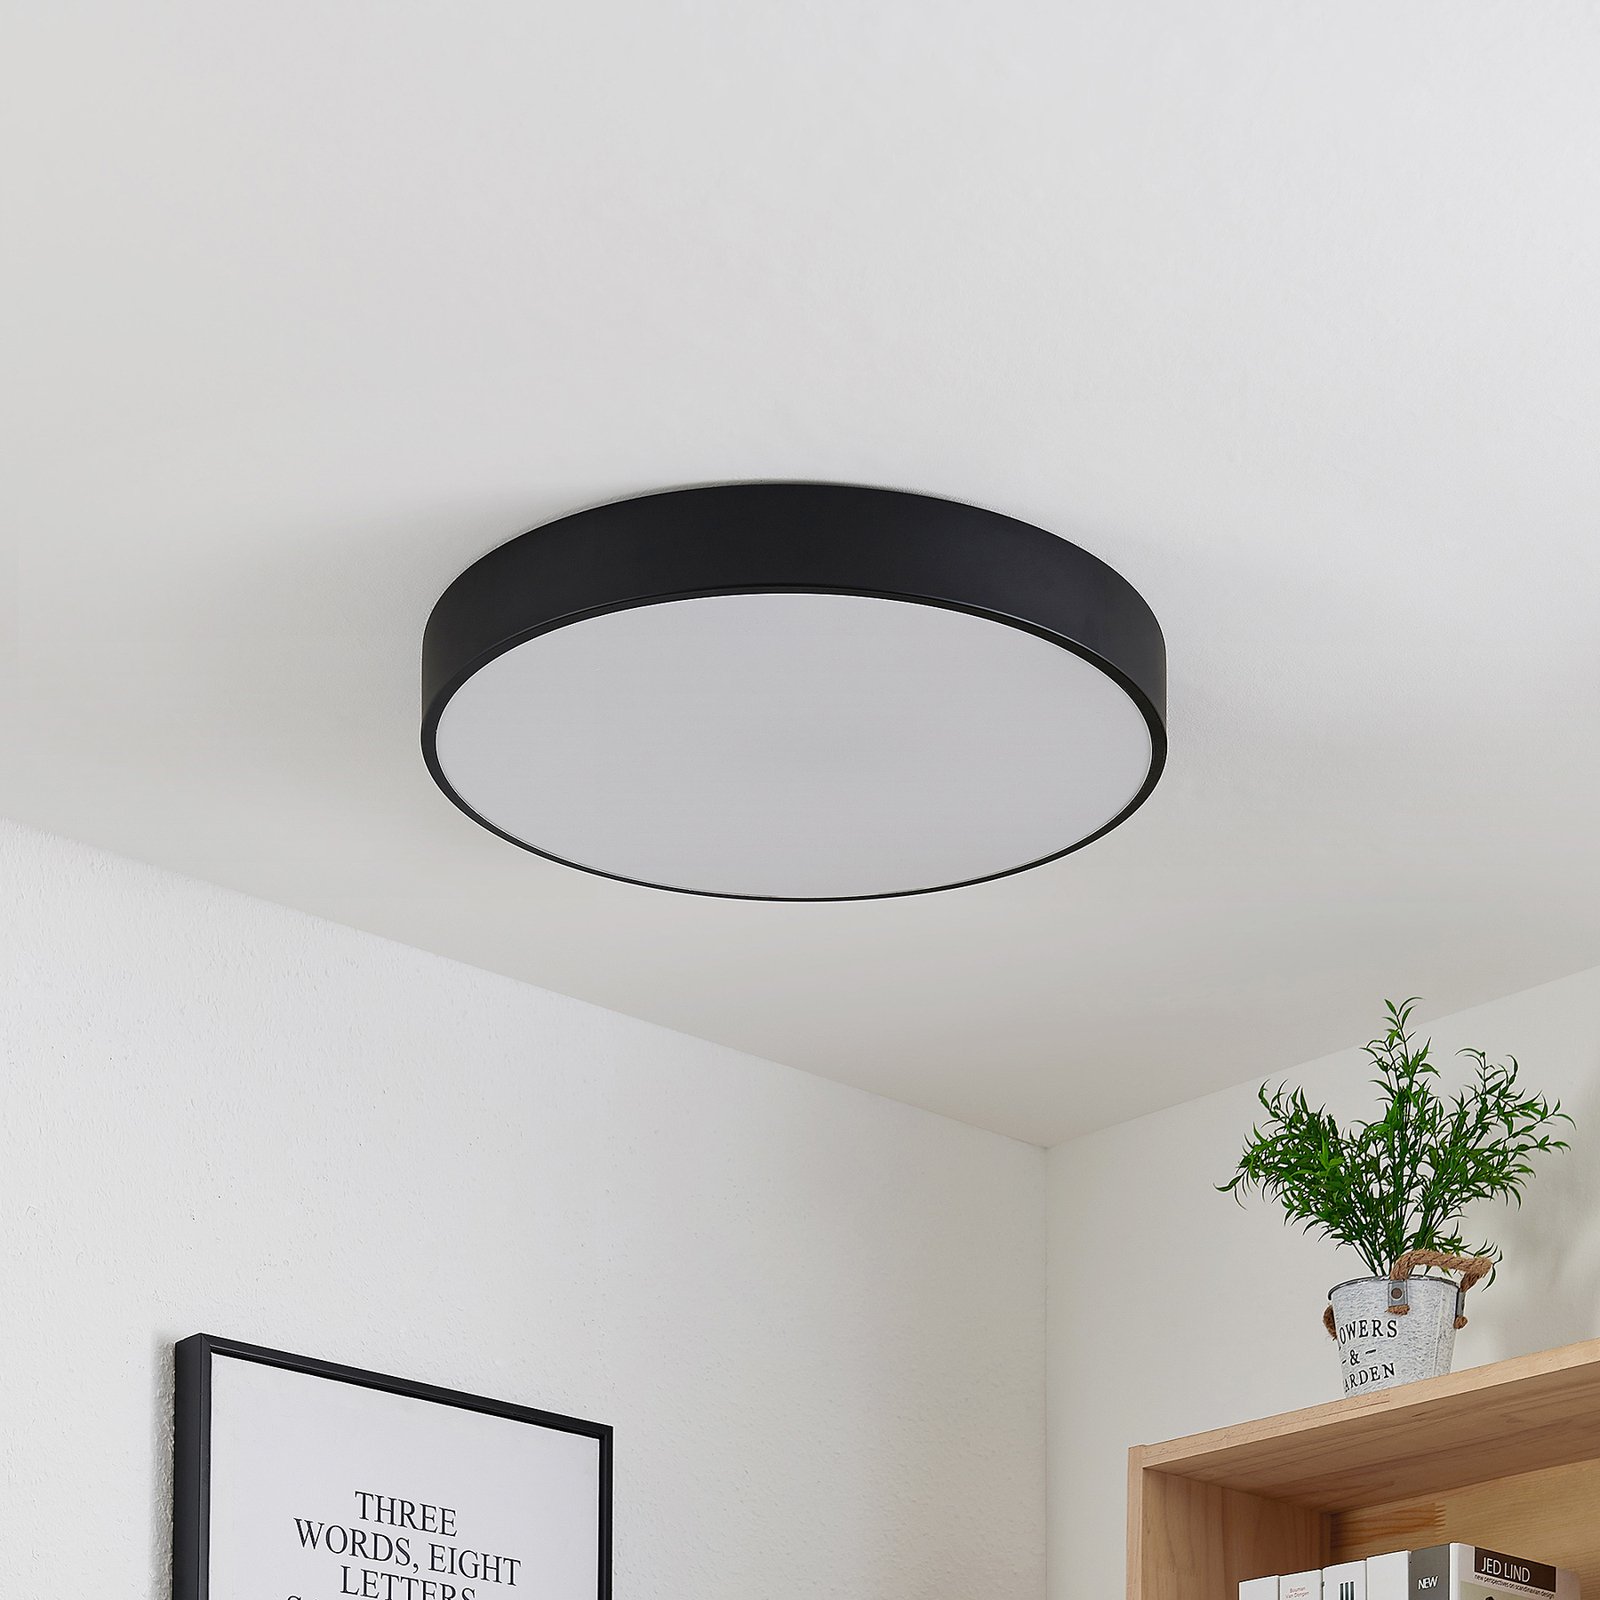 Lindby Simera LED plafondlamp 50cm, zwart